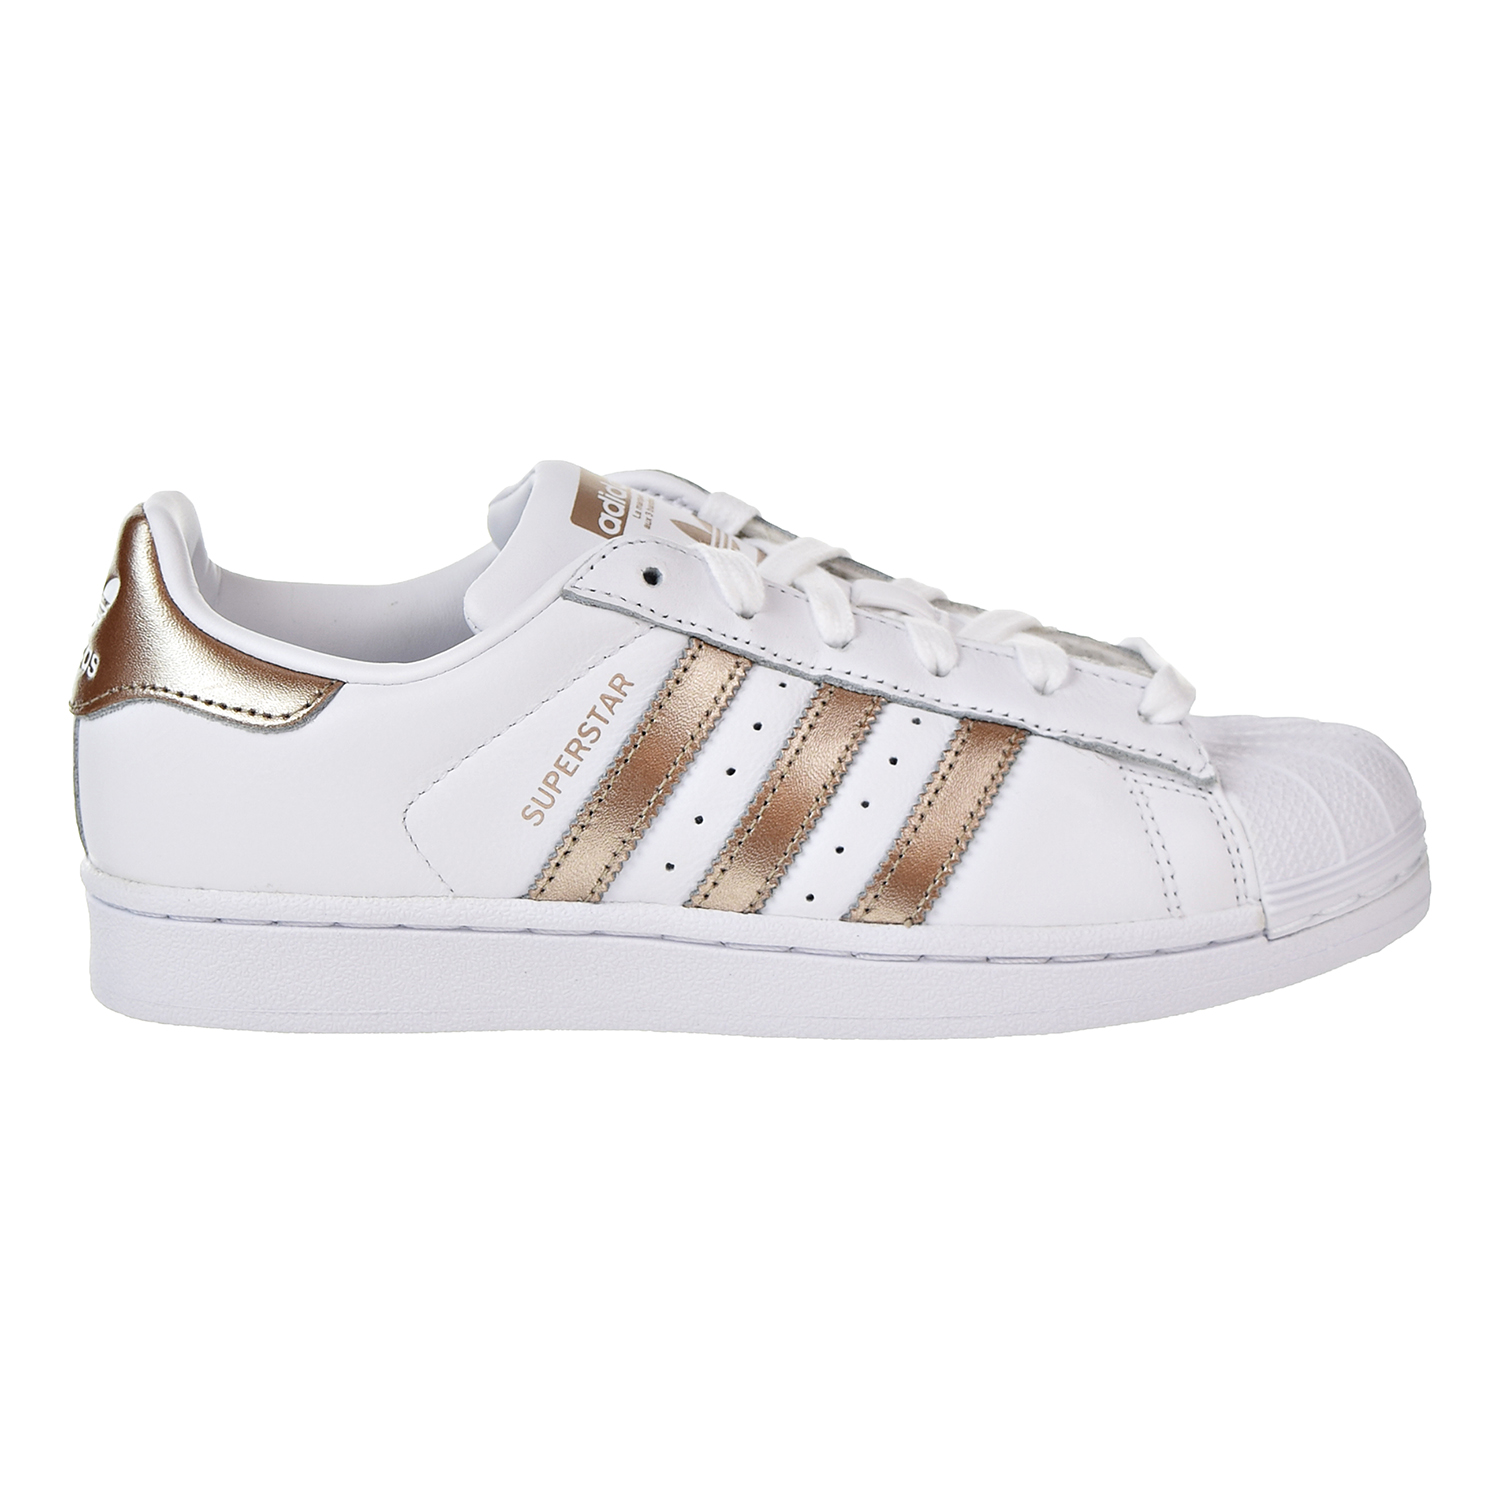 Adidas Originals Superstar Women's Shoes White - Cyber Metallic - White  CG5463 | eBay